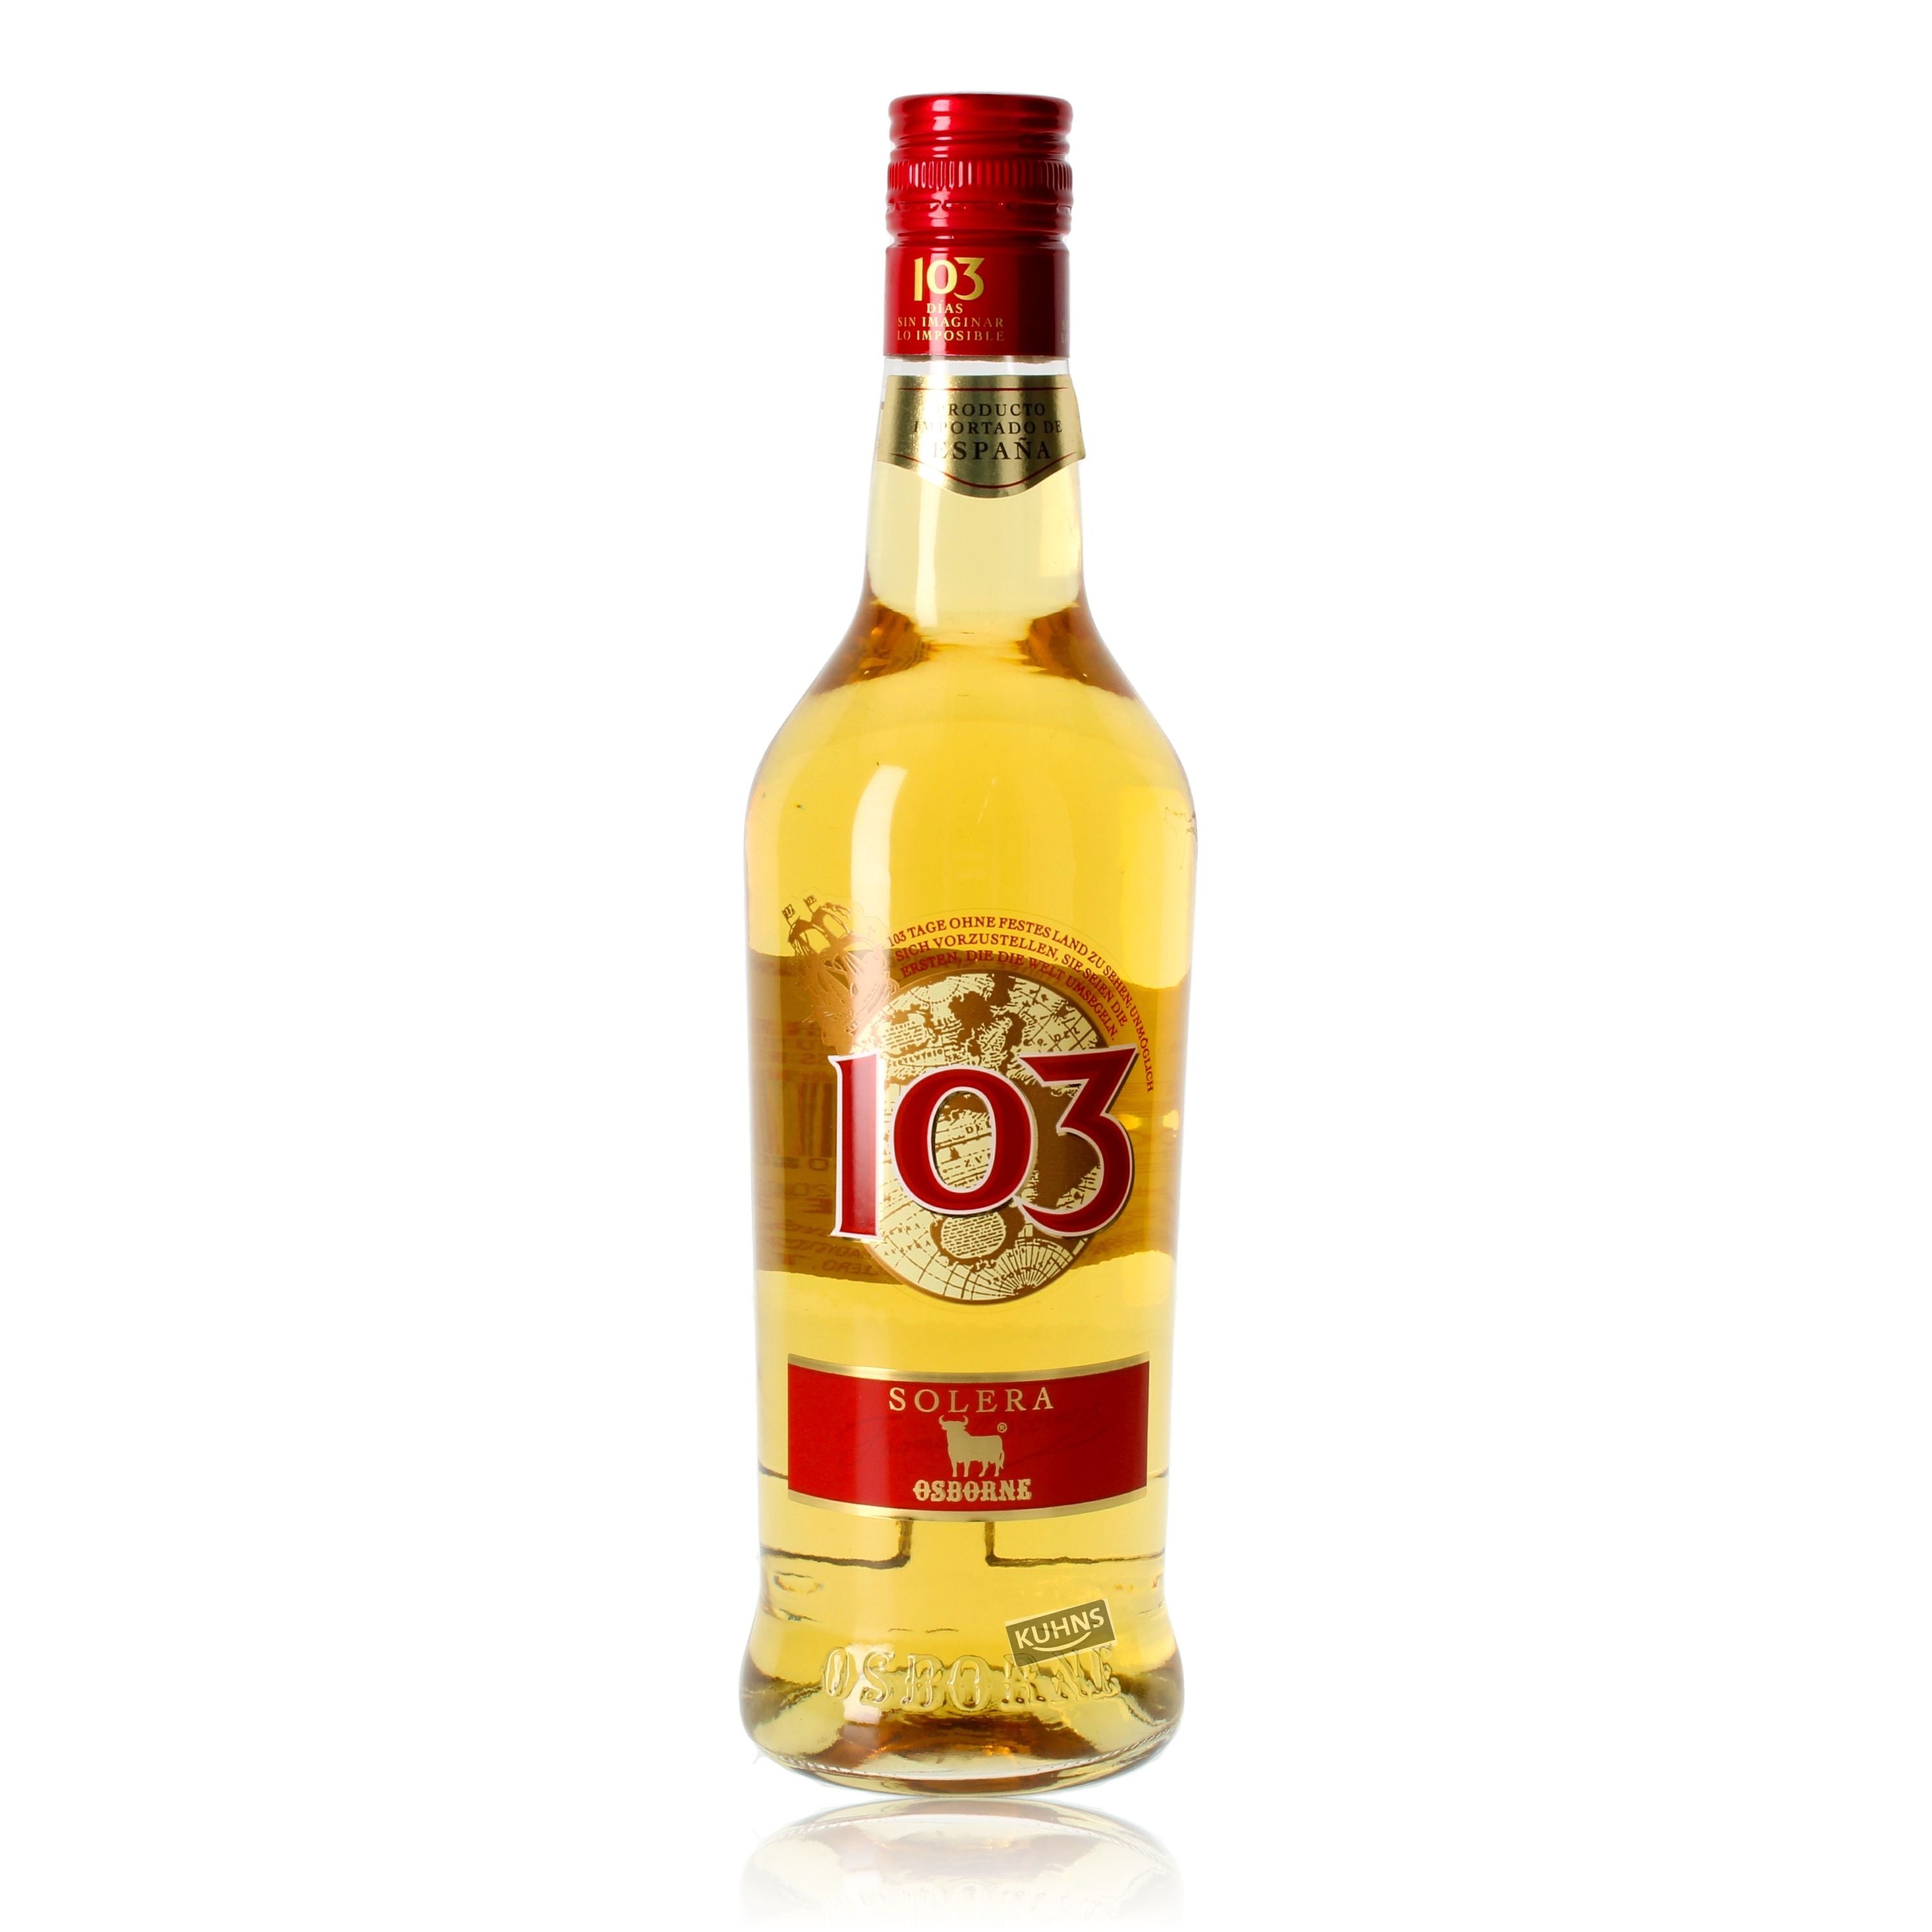 Osborne 103 0.7l alc. 30% by volume, Brandy Spain